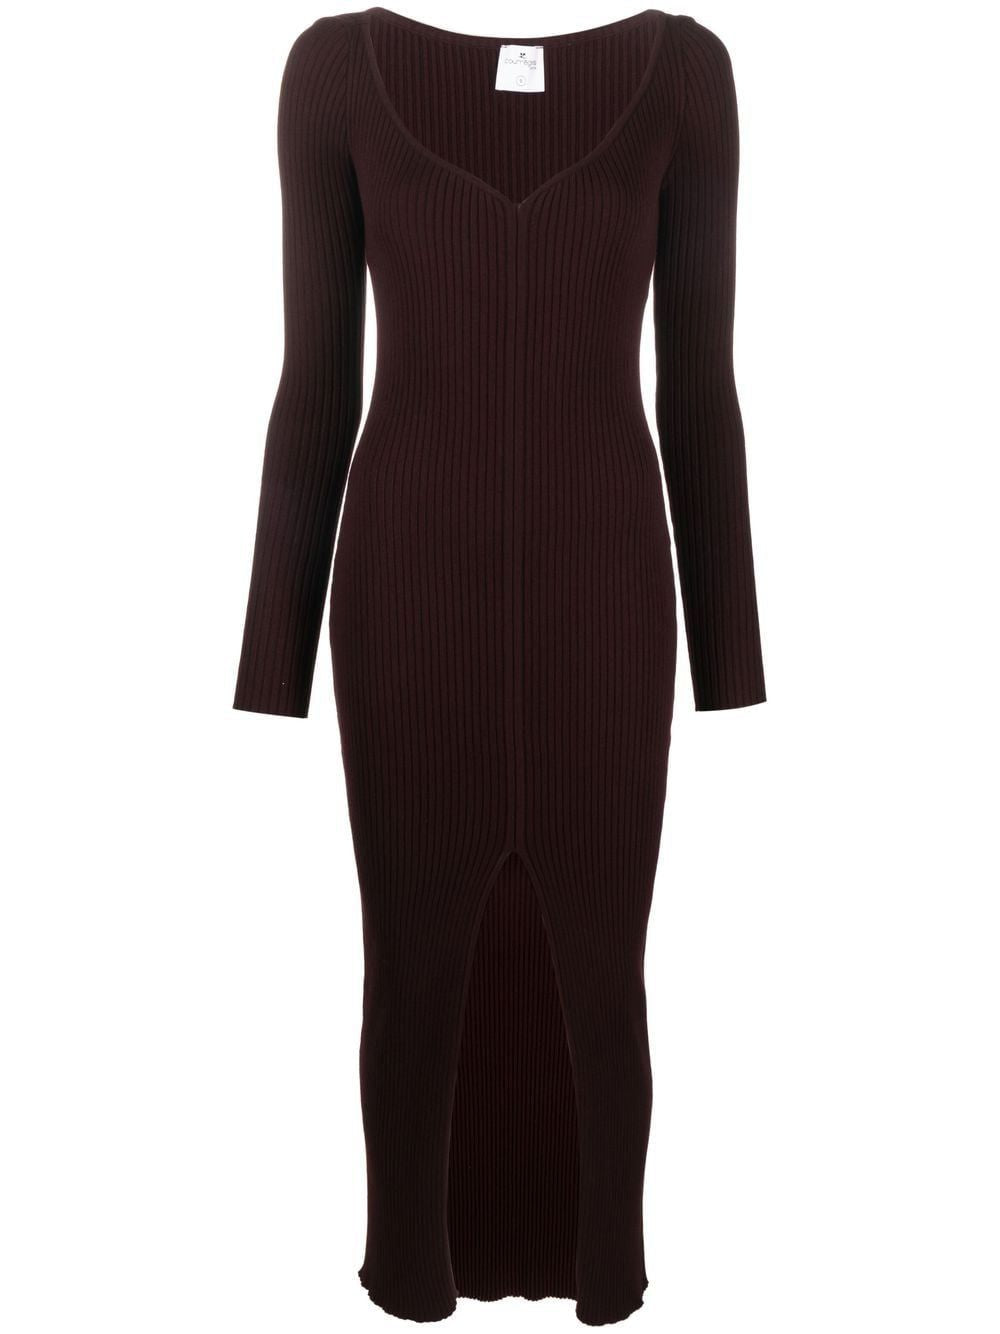 COURREGÈS Burgundy Knit Dress for Women - FW22